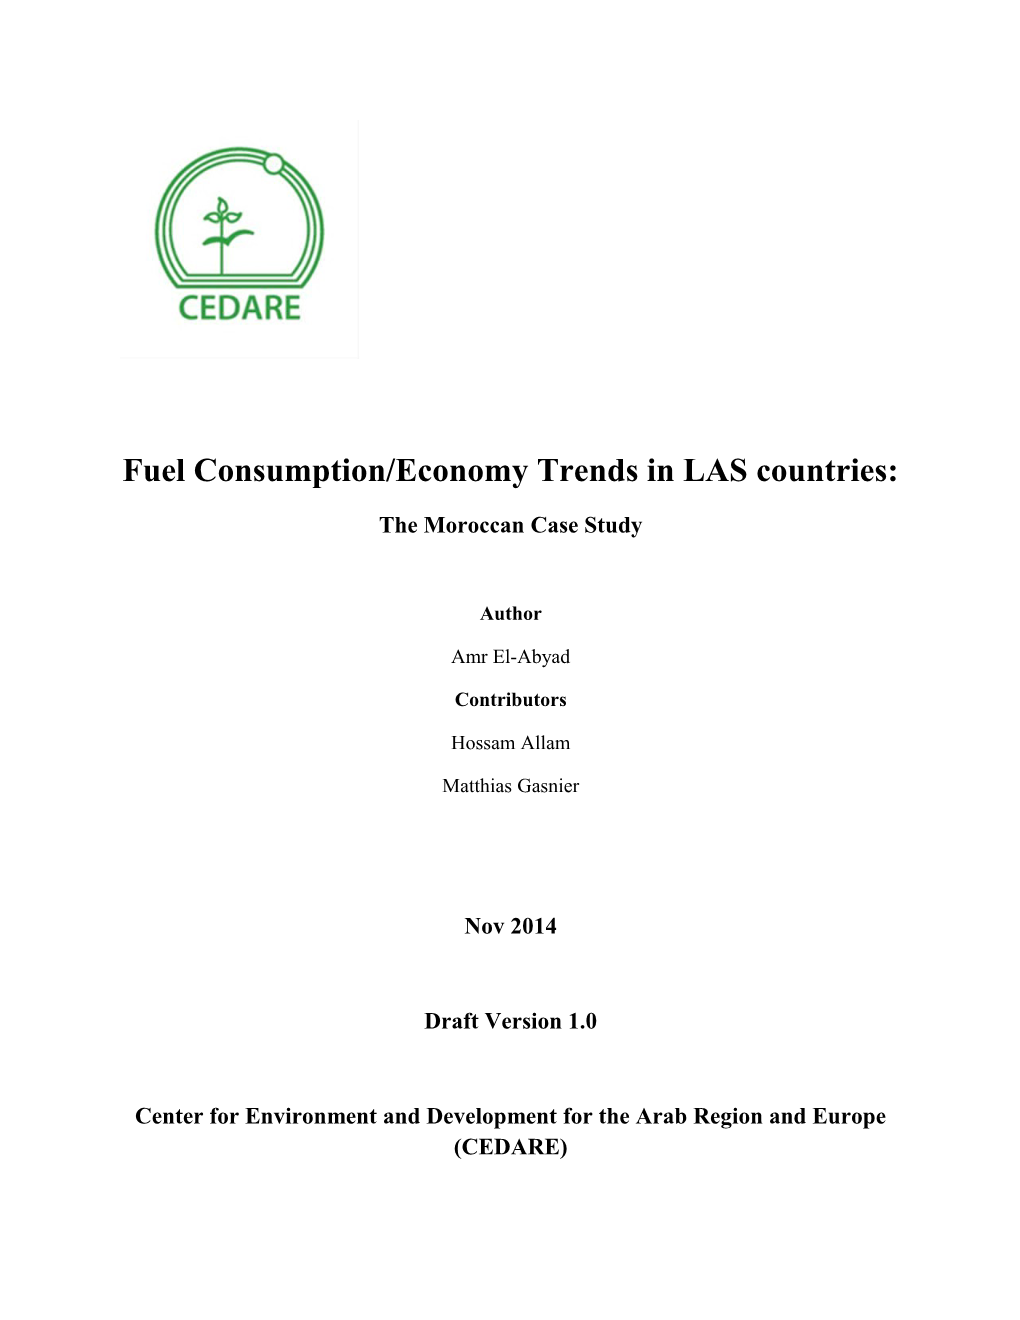 Fuel Consumption/Economy Trends in LAS Countries